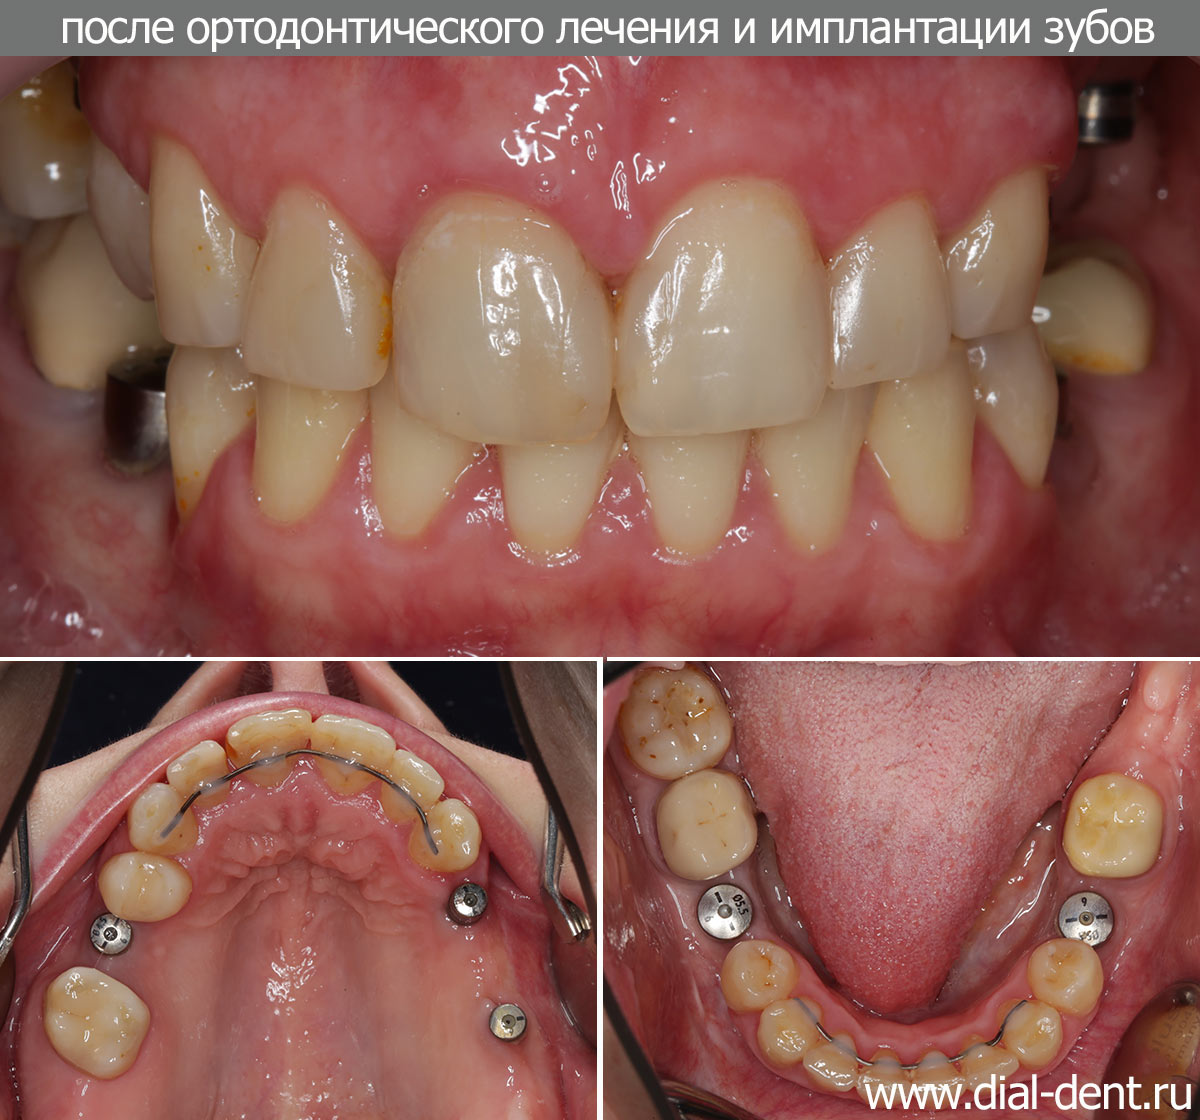 вид зубов после снятия брекетов и имплантации